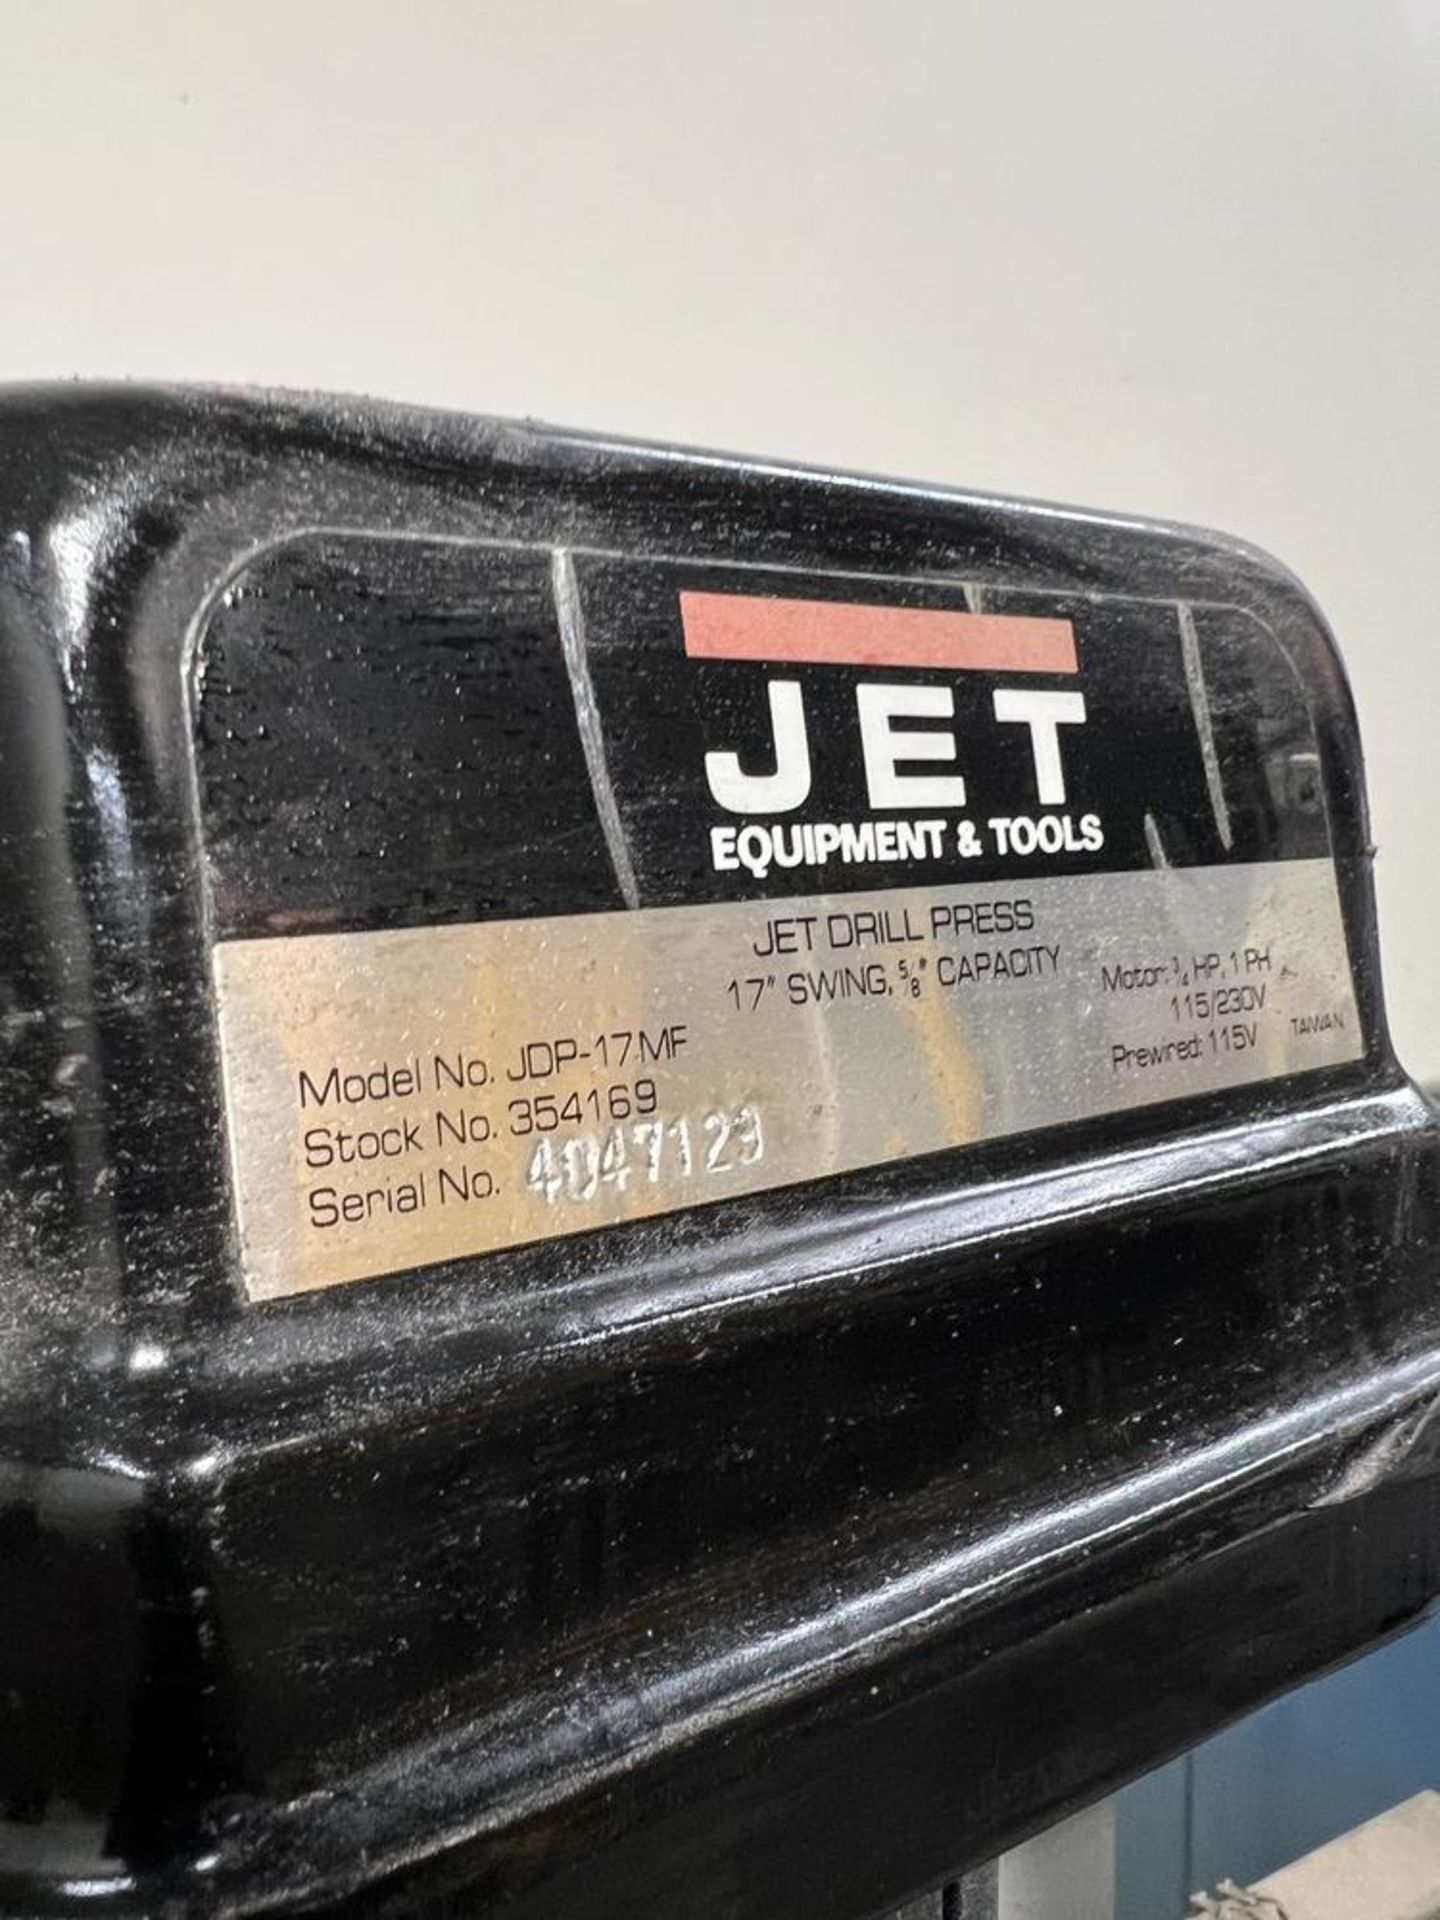 Jet Drill Press 3/4 HP With Jacob Chuck Model JDP-17MF - Image 2 of 8